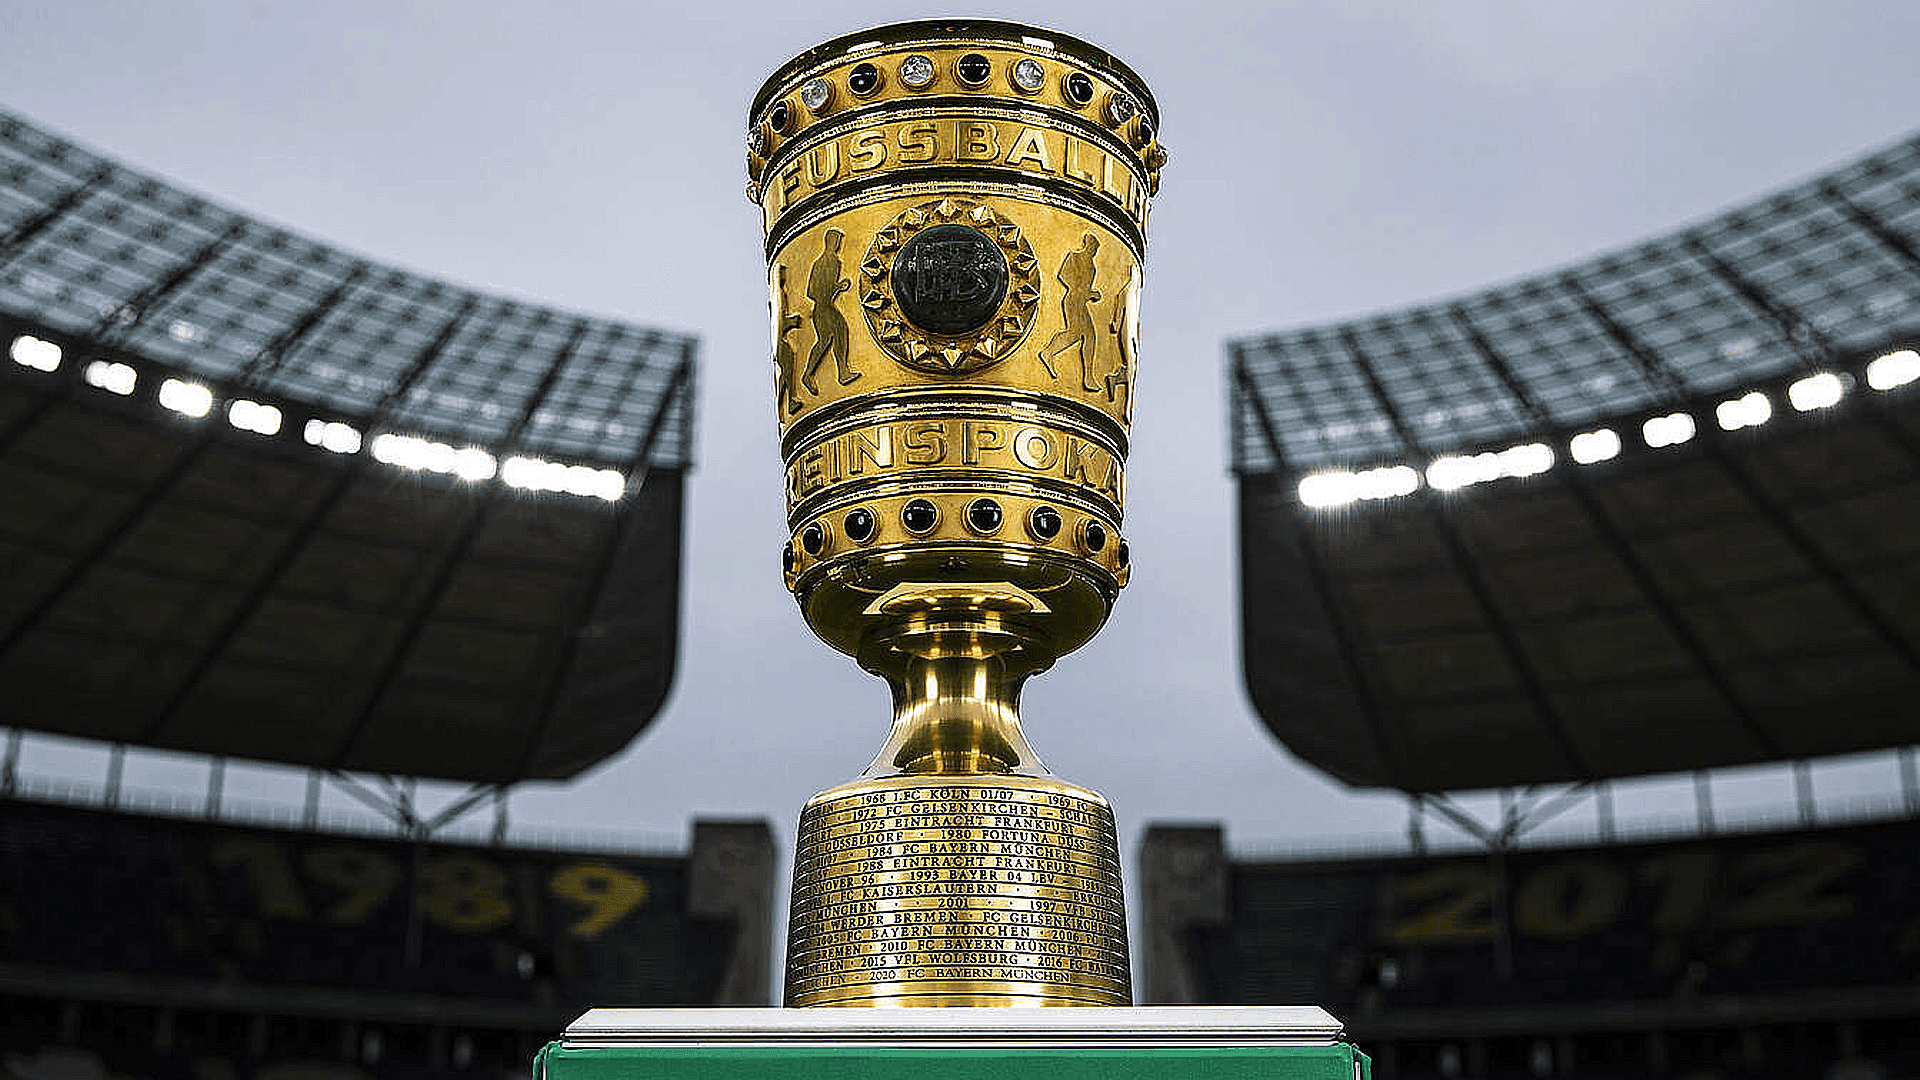 Kairserslautern-Bayer Leverkusen Streaming Gratis: la Coppa di Germania in Diretta LIVE